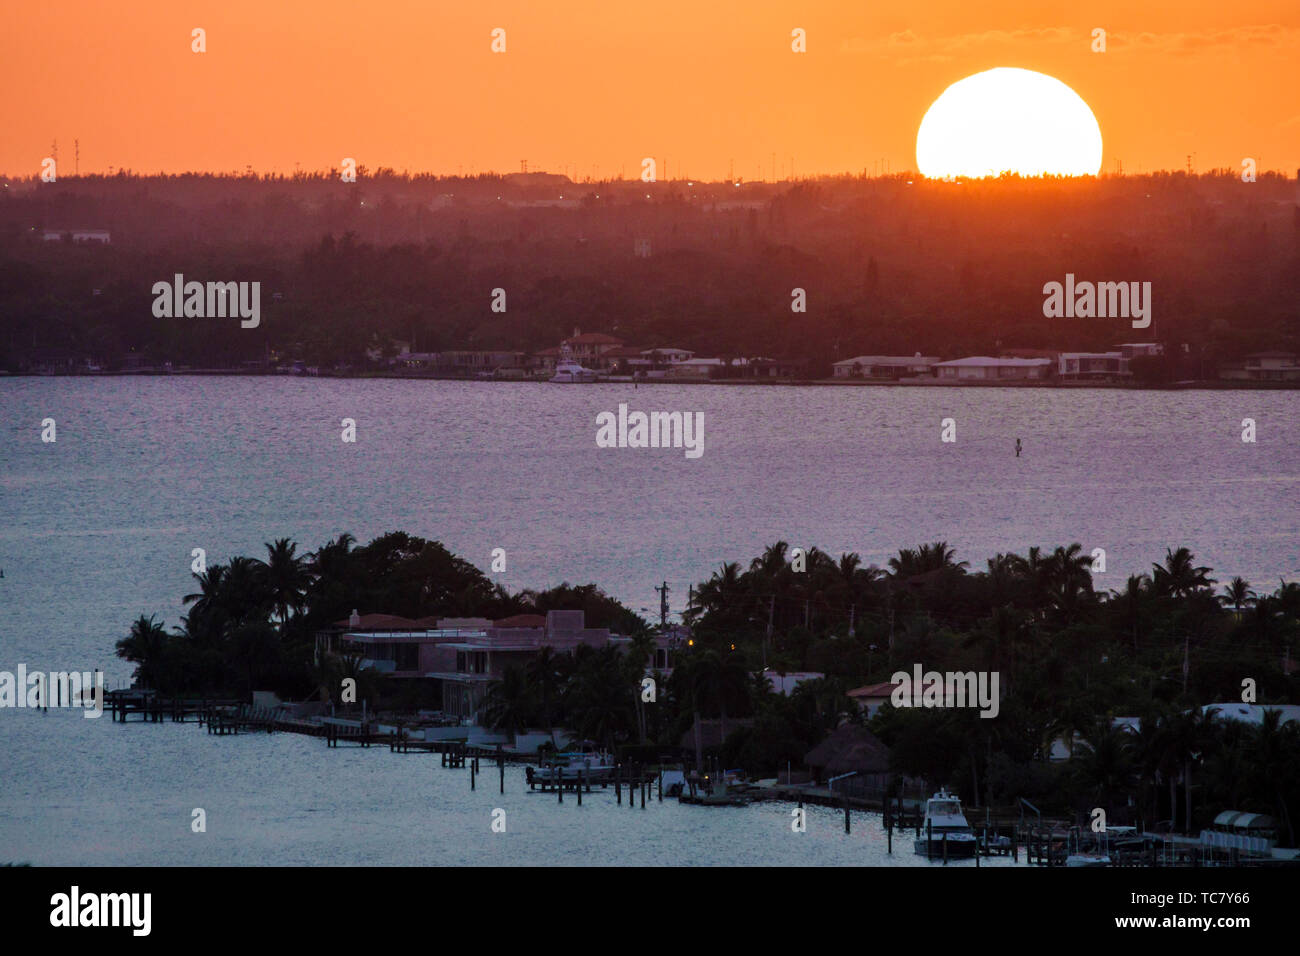 Miami Beach Florida, Biscayne point, Biscayne Bay, coucher de soleil, FL190430088 Banque D'Images